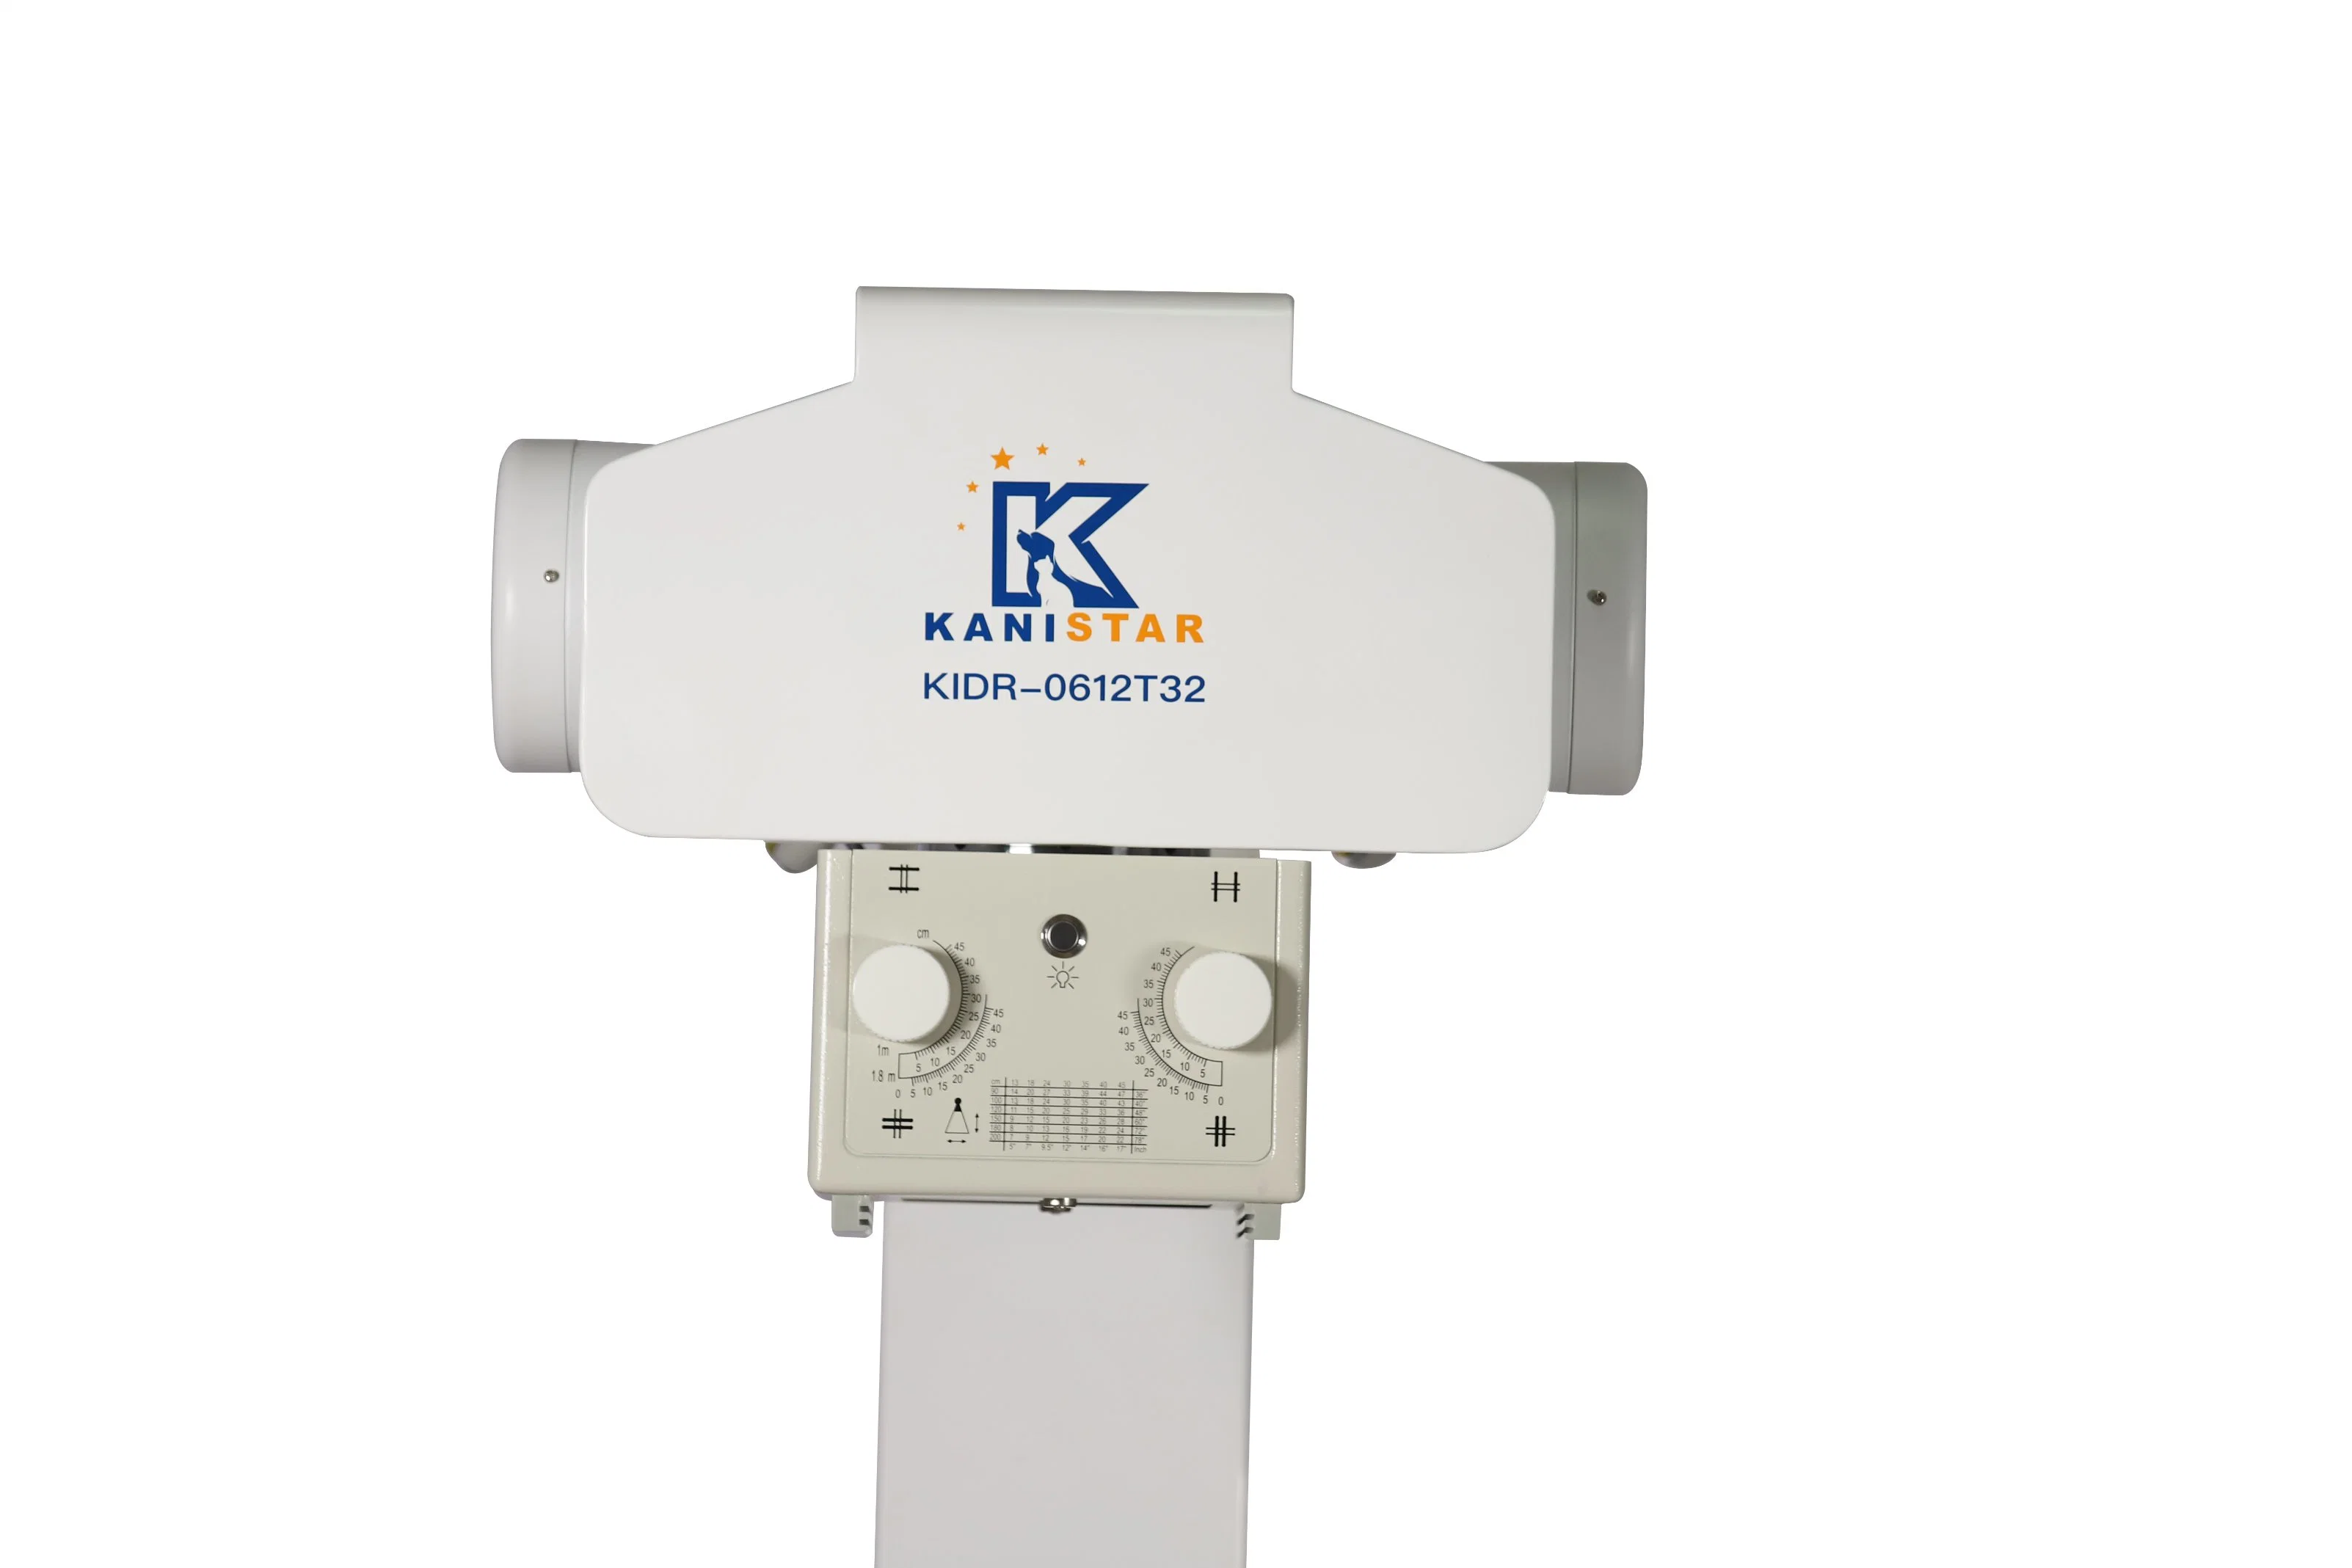 Kanistar Vet Stationary Dr X Ray System Digital Radiography Fluoroscopy X-ray Machine Portable Hospital Equipment Machine X Ray System